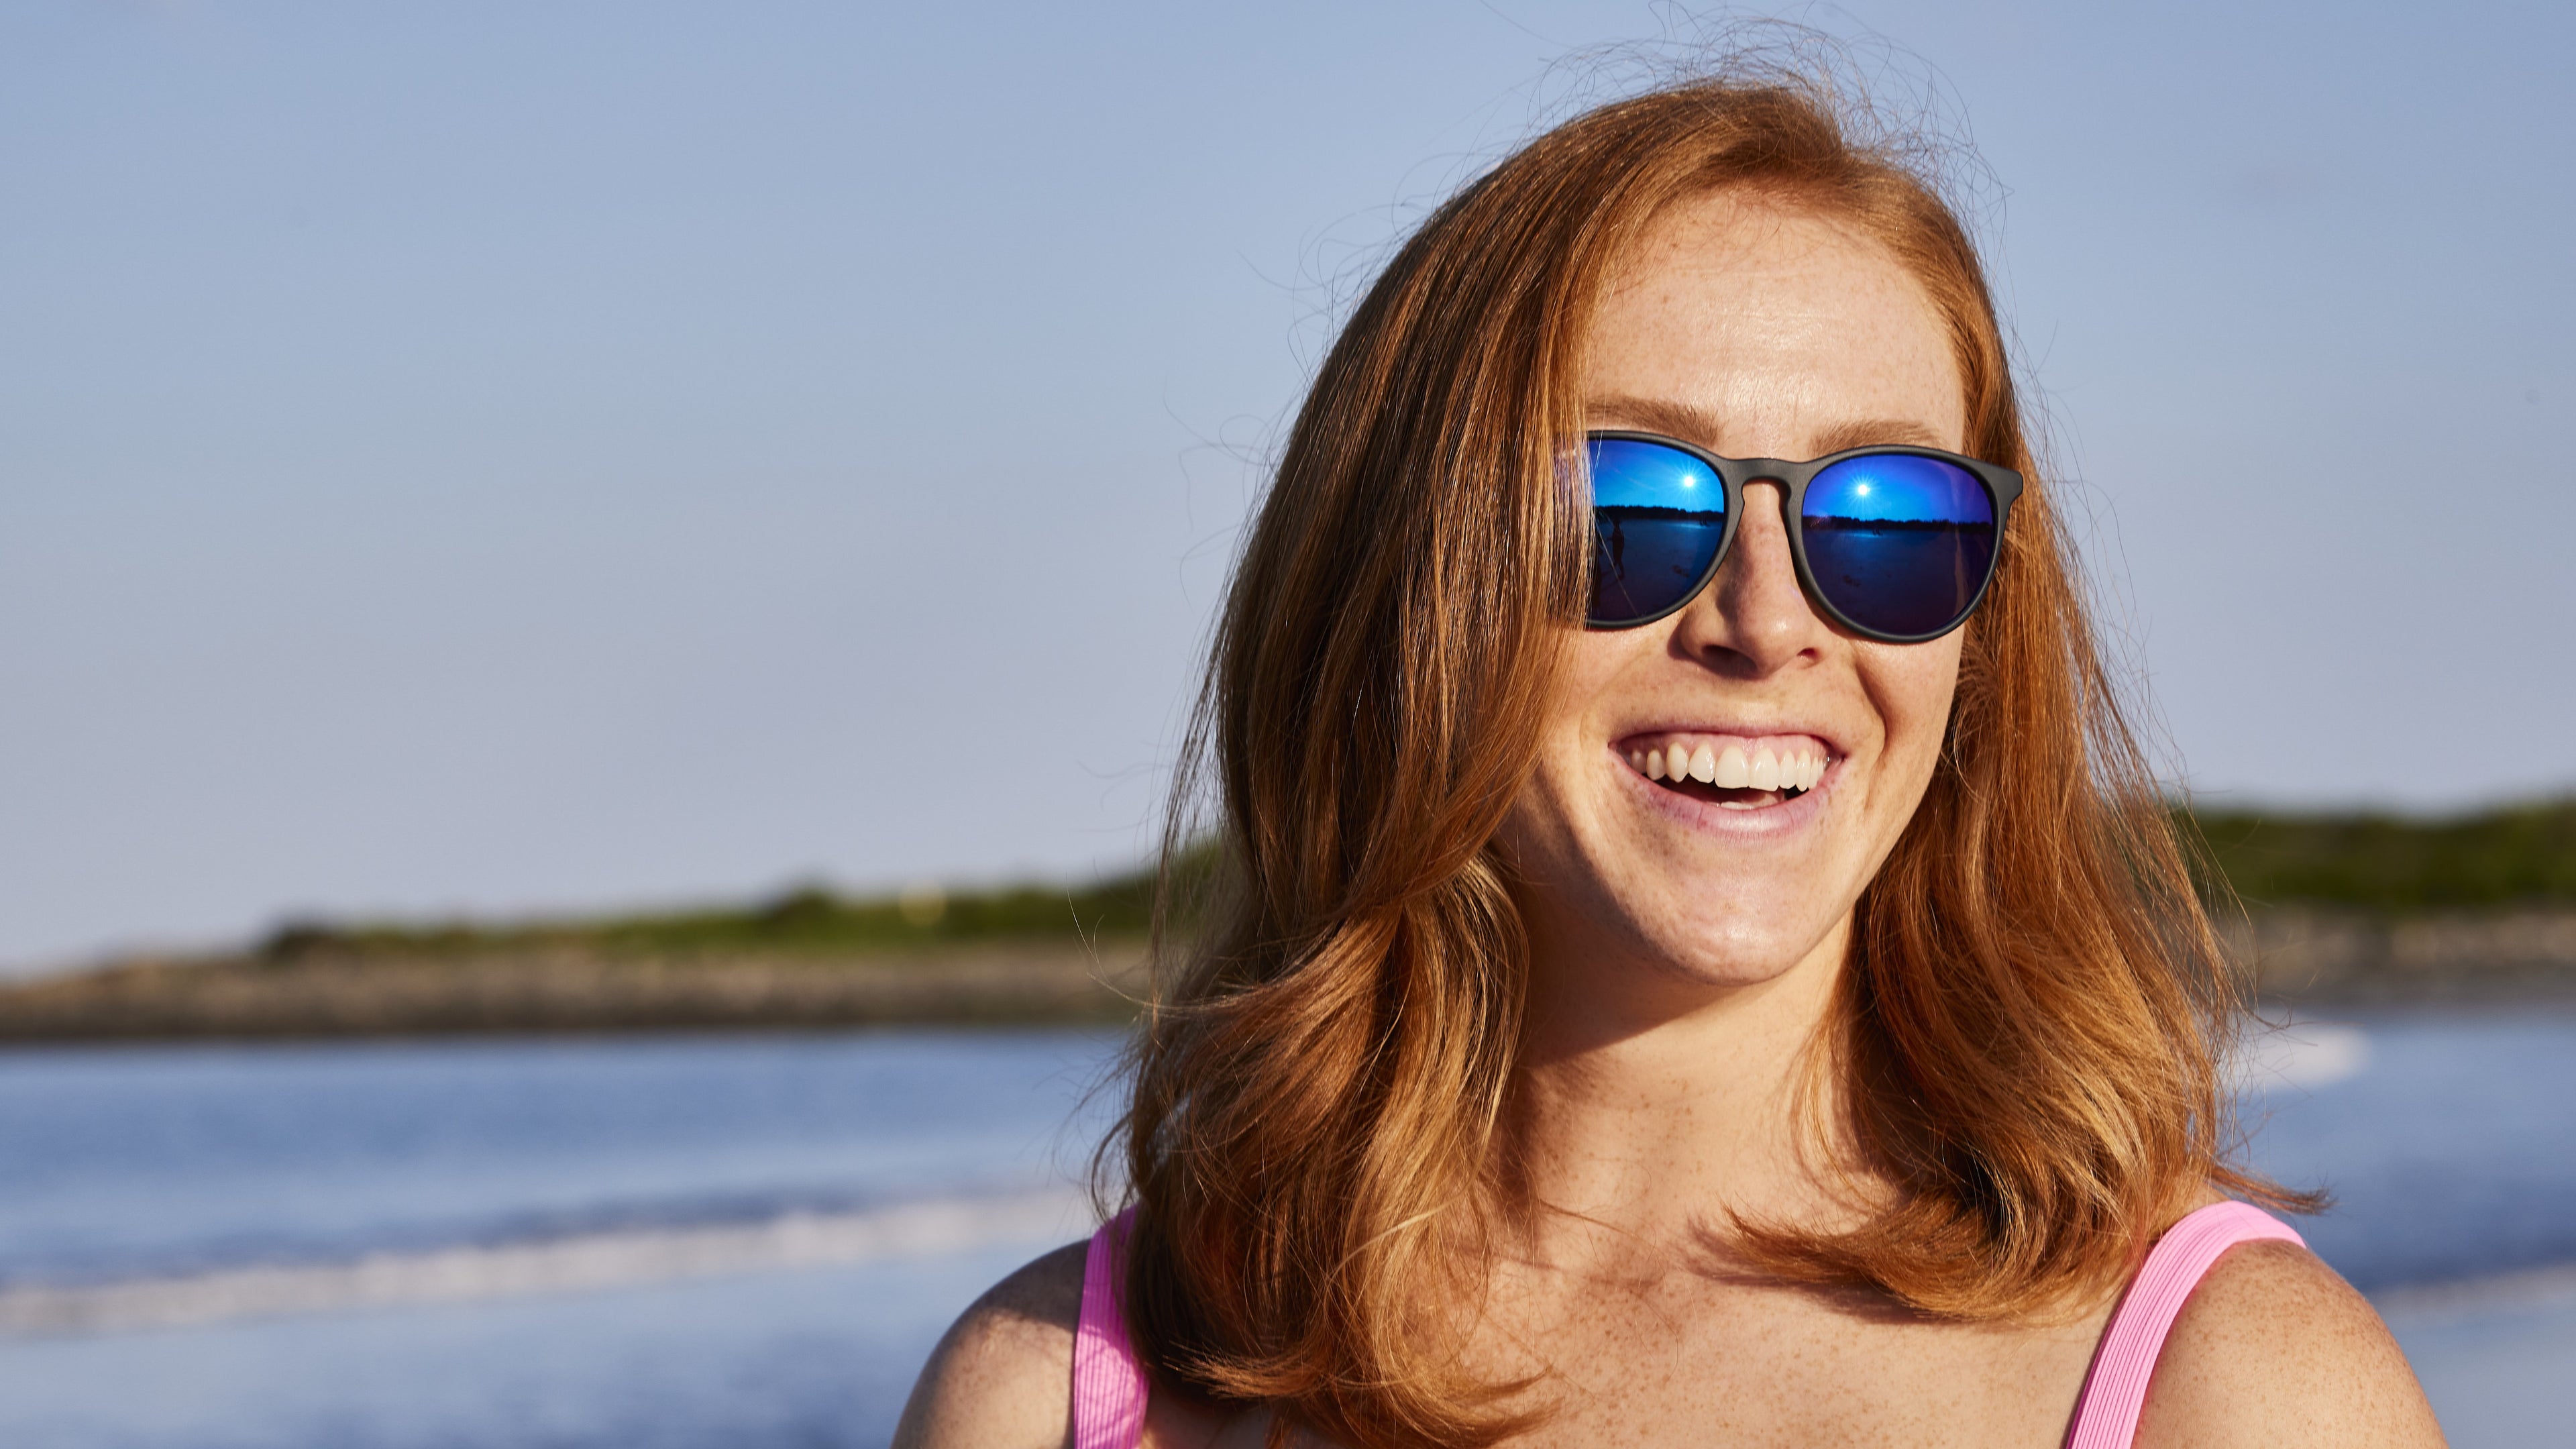 women wearing blue sunglasses in the sun smiling